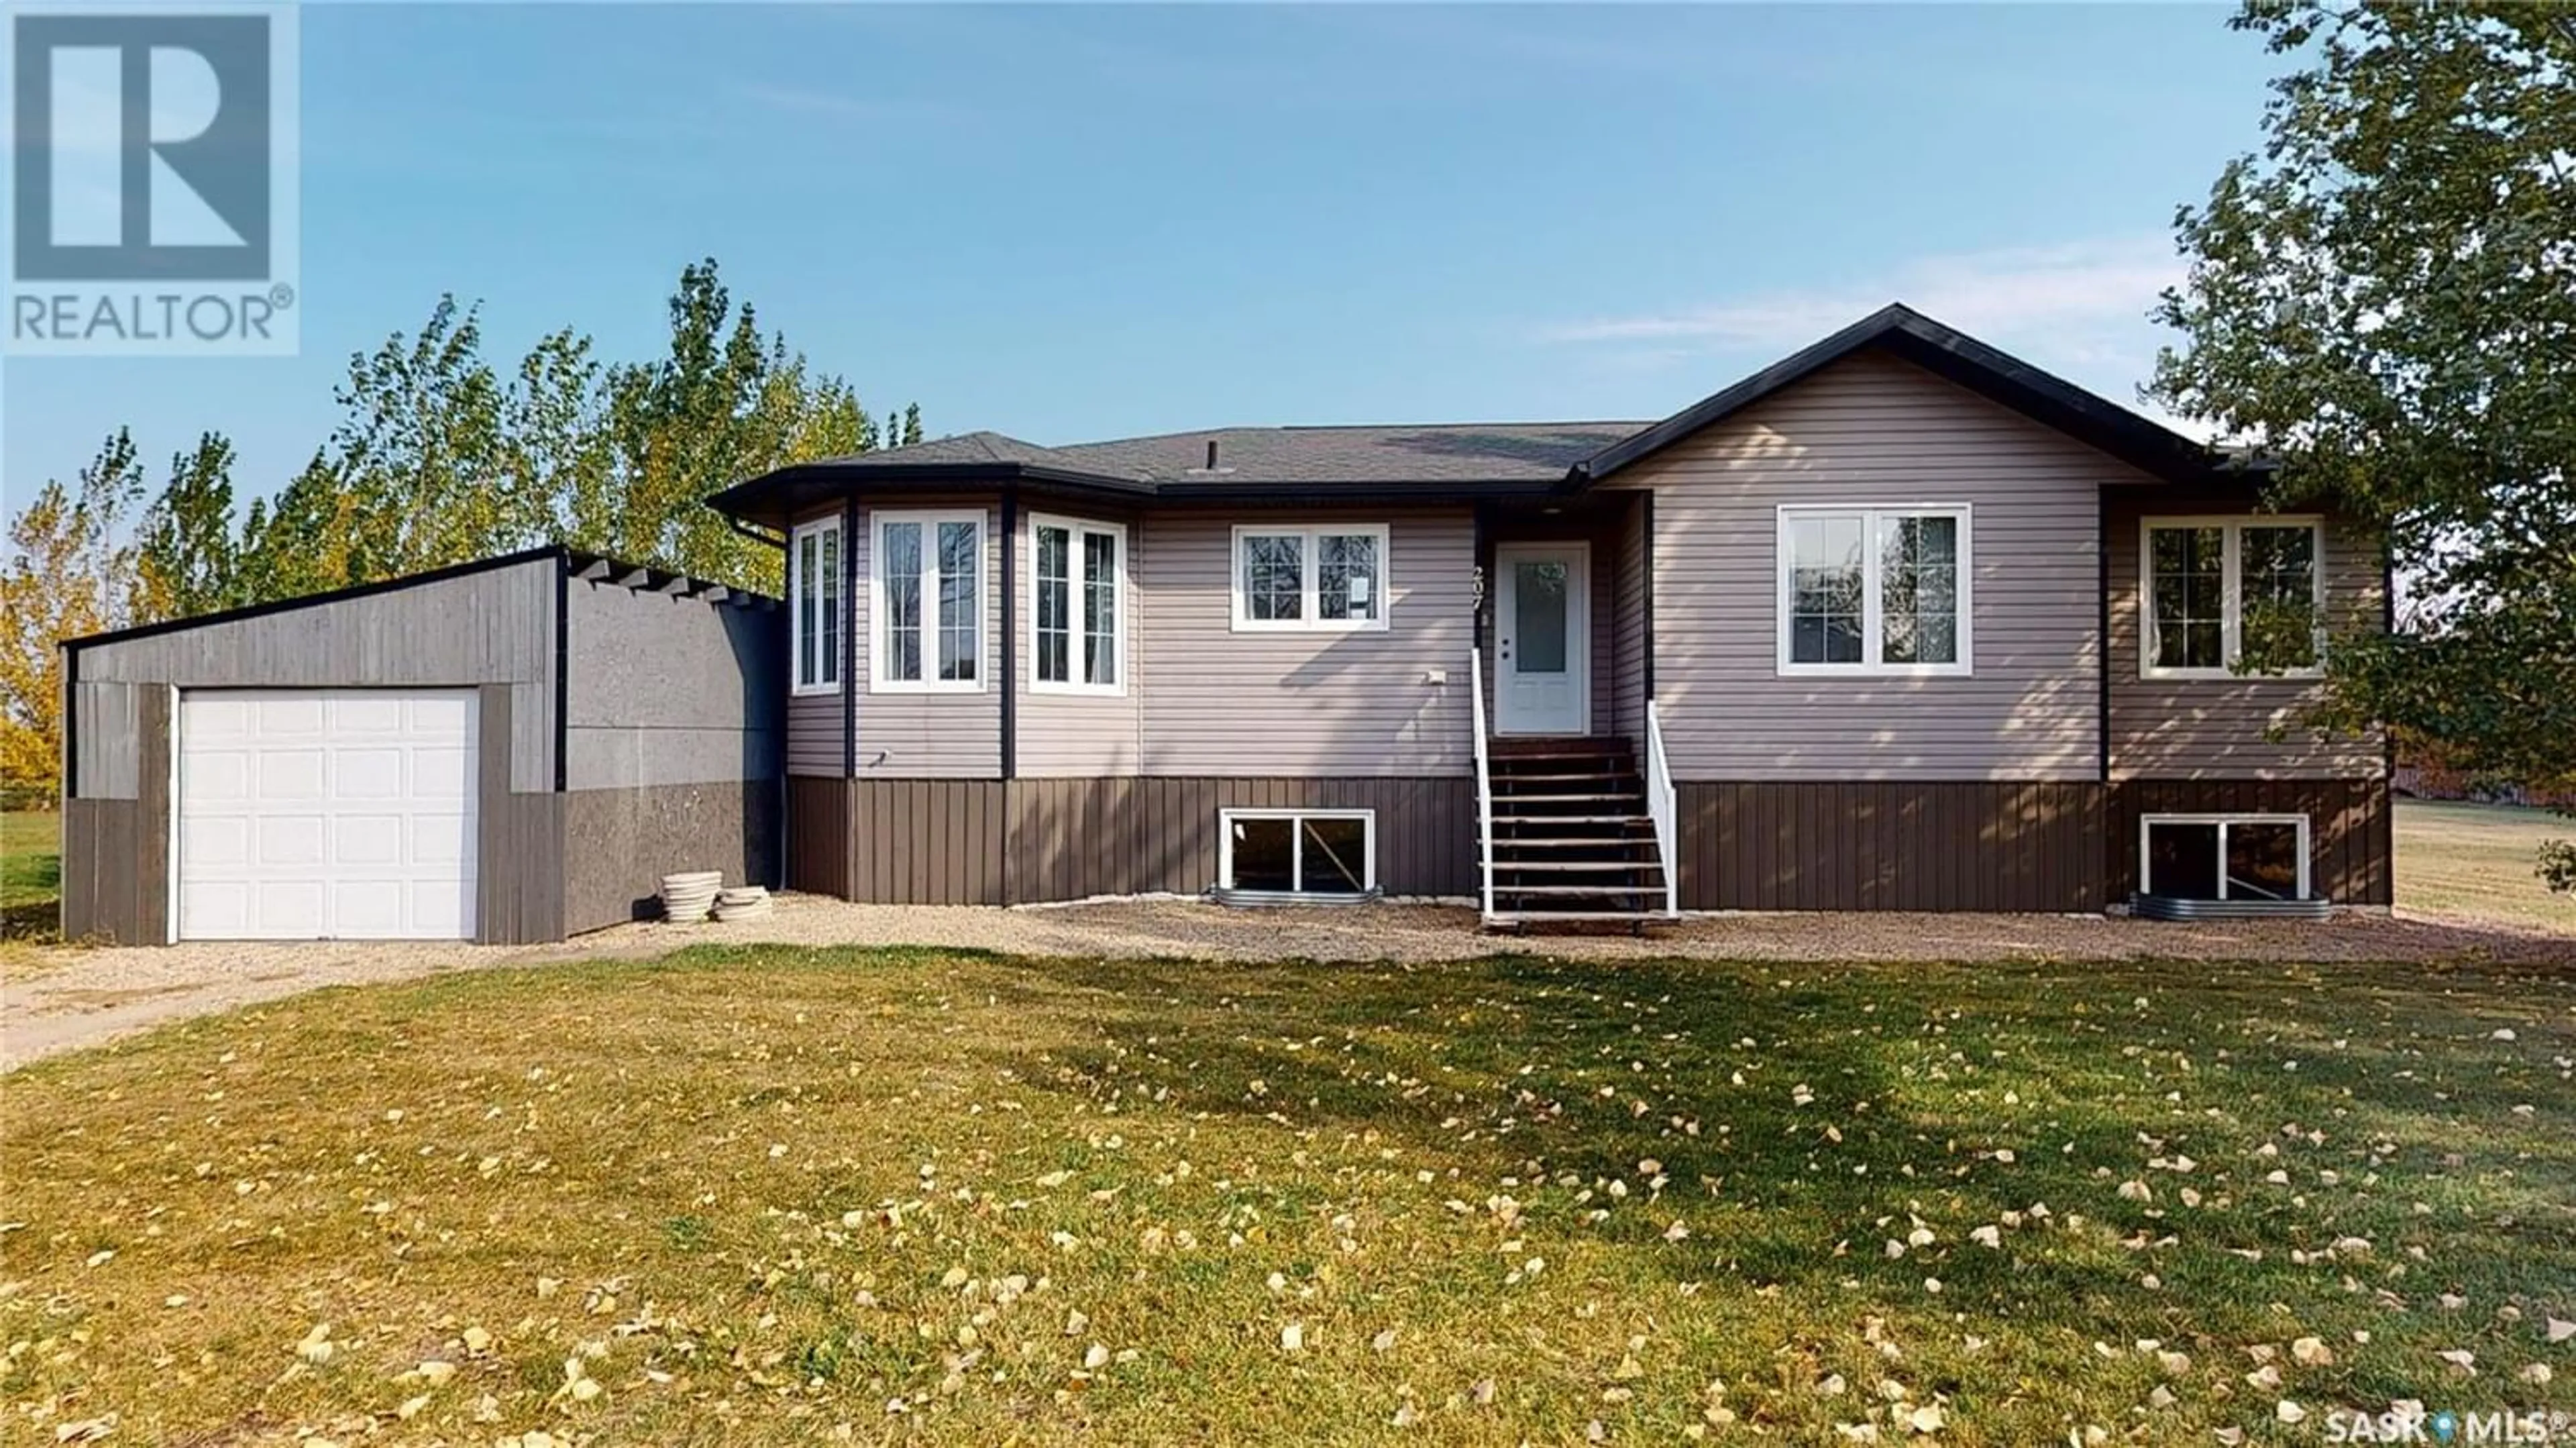 Home with vinyl exterior material for 207 1st STREET E, Alida Saskatchewan S0C0B0